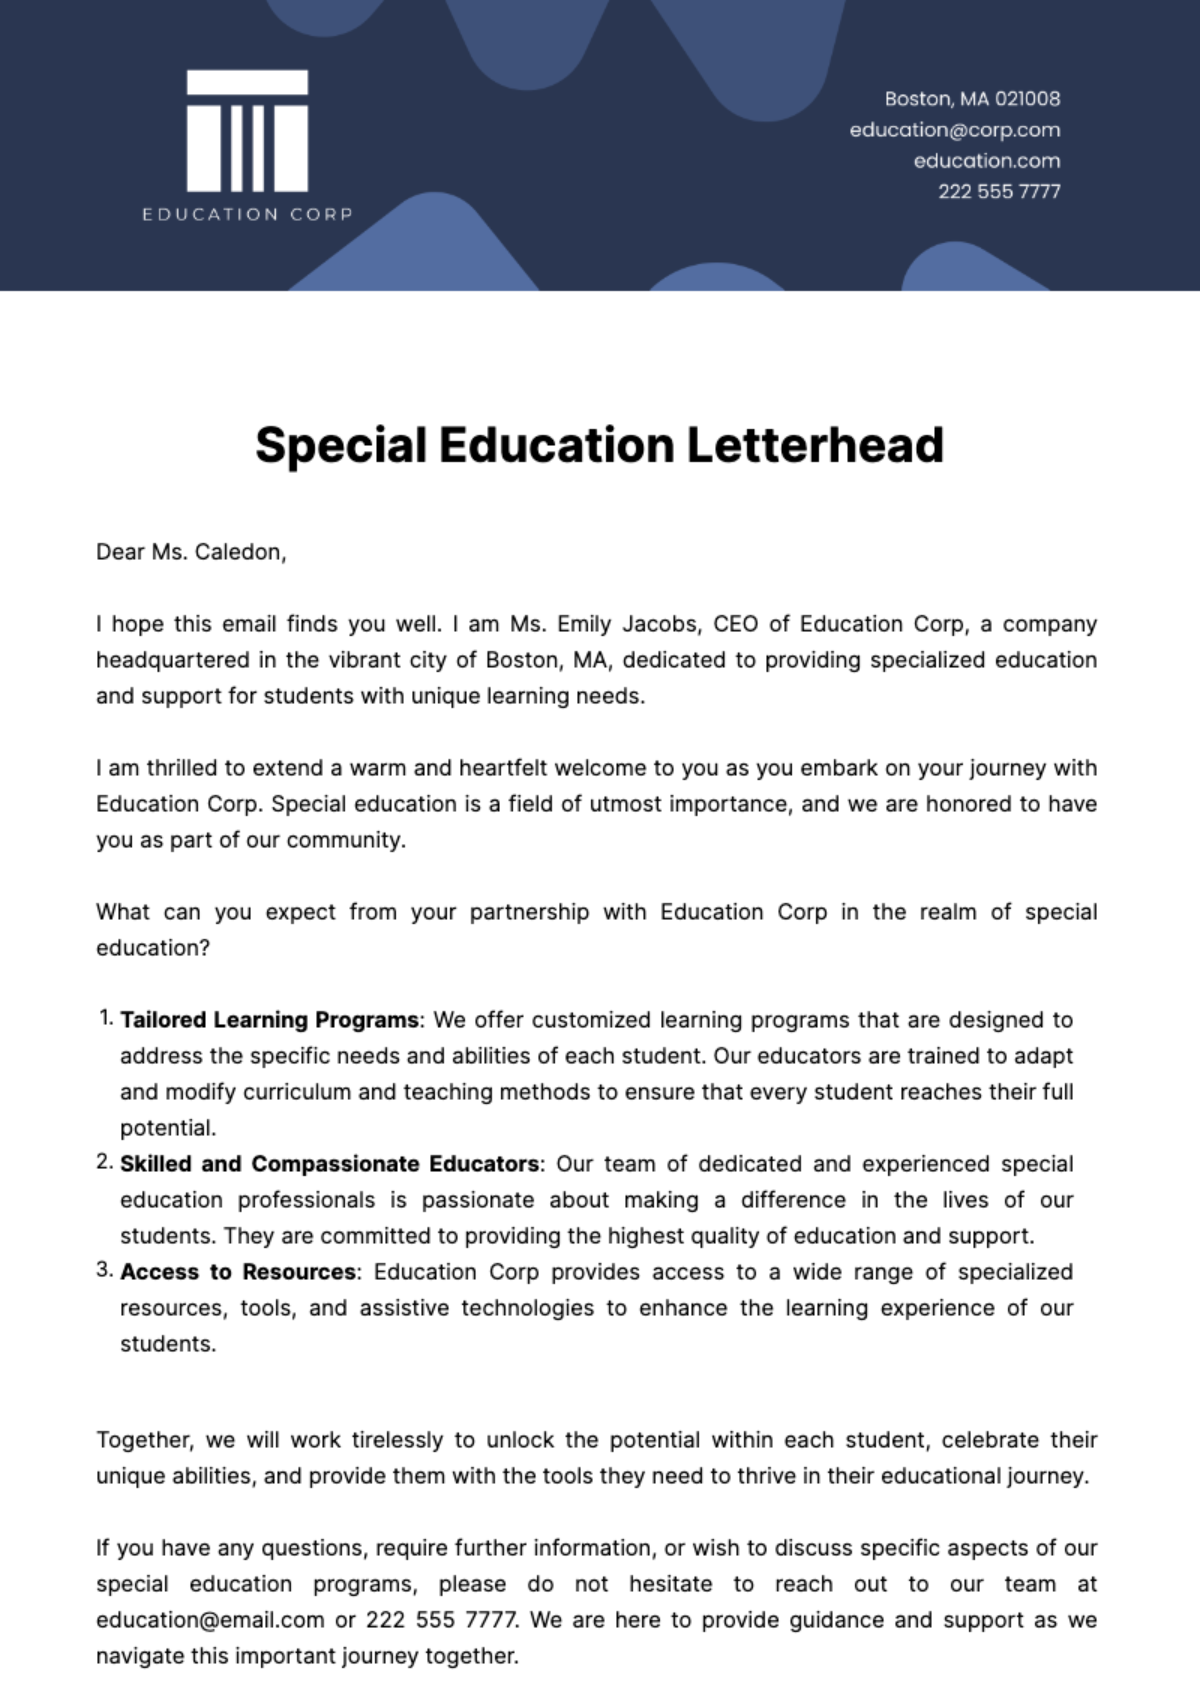 Special Education Letterhead Template